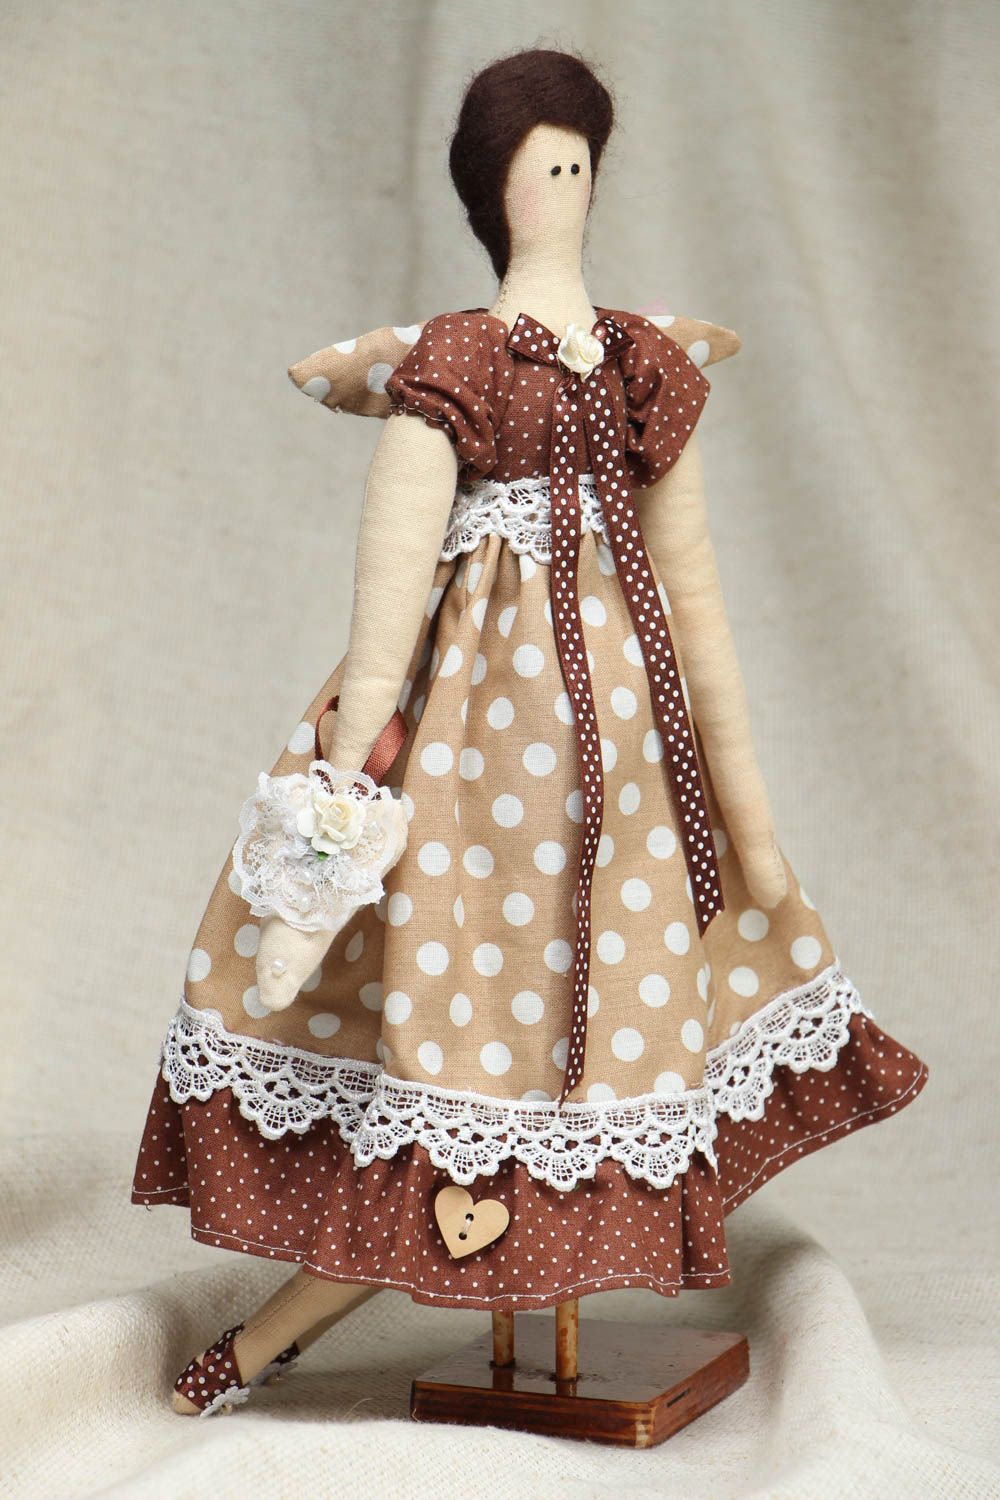 Handmade doll in dress photo 1